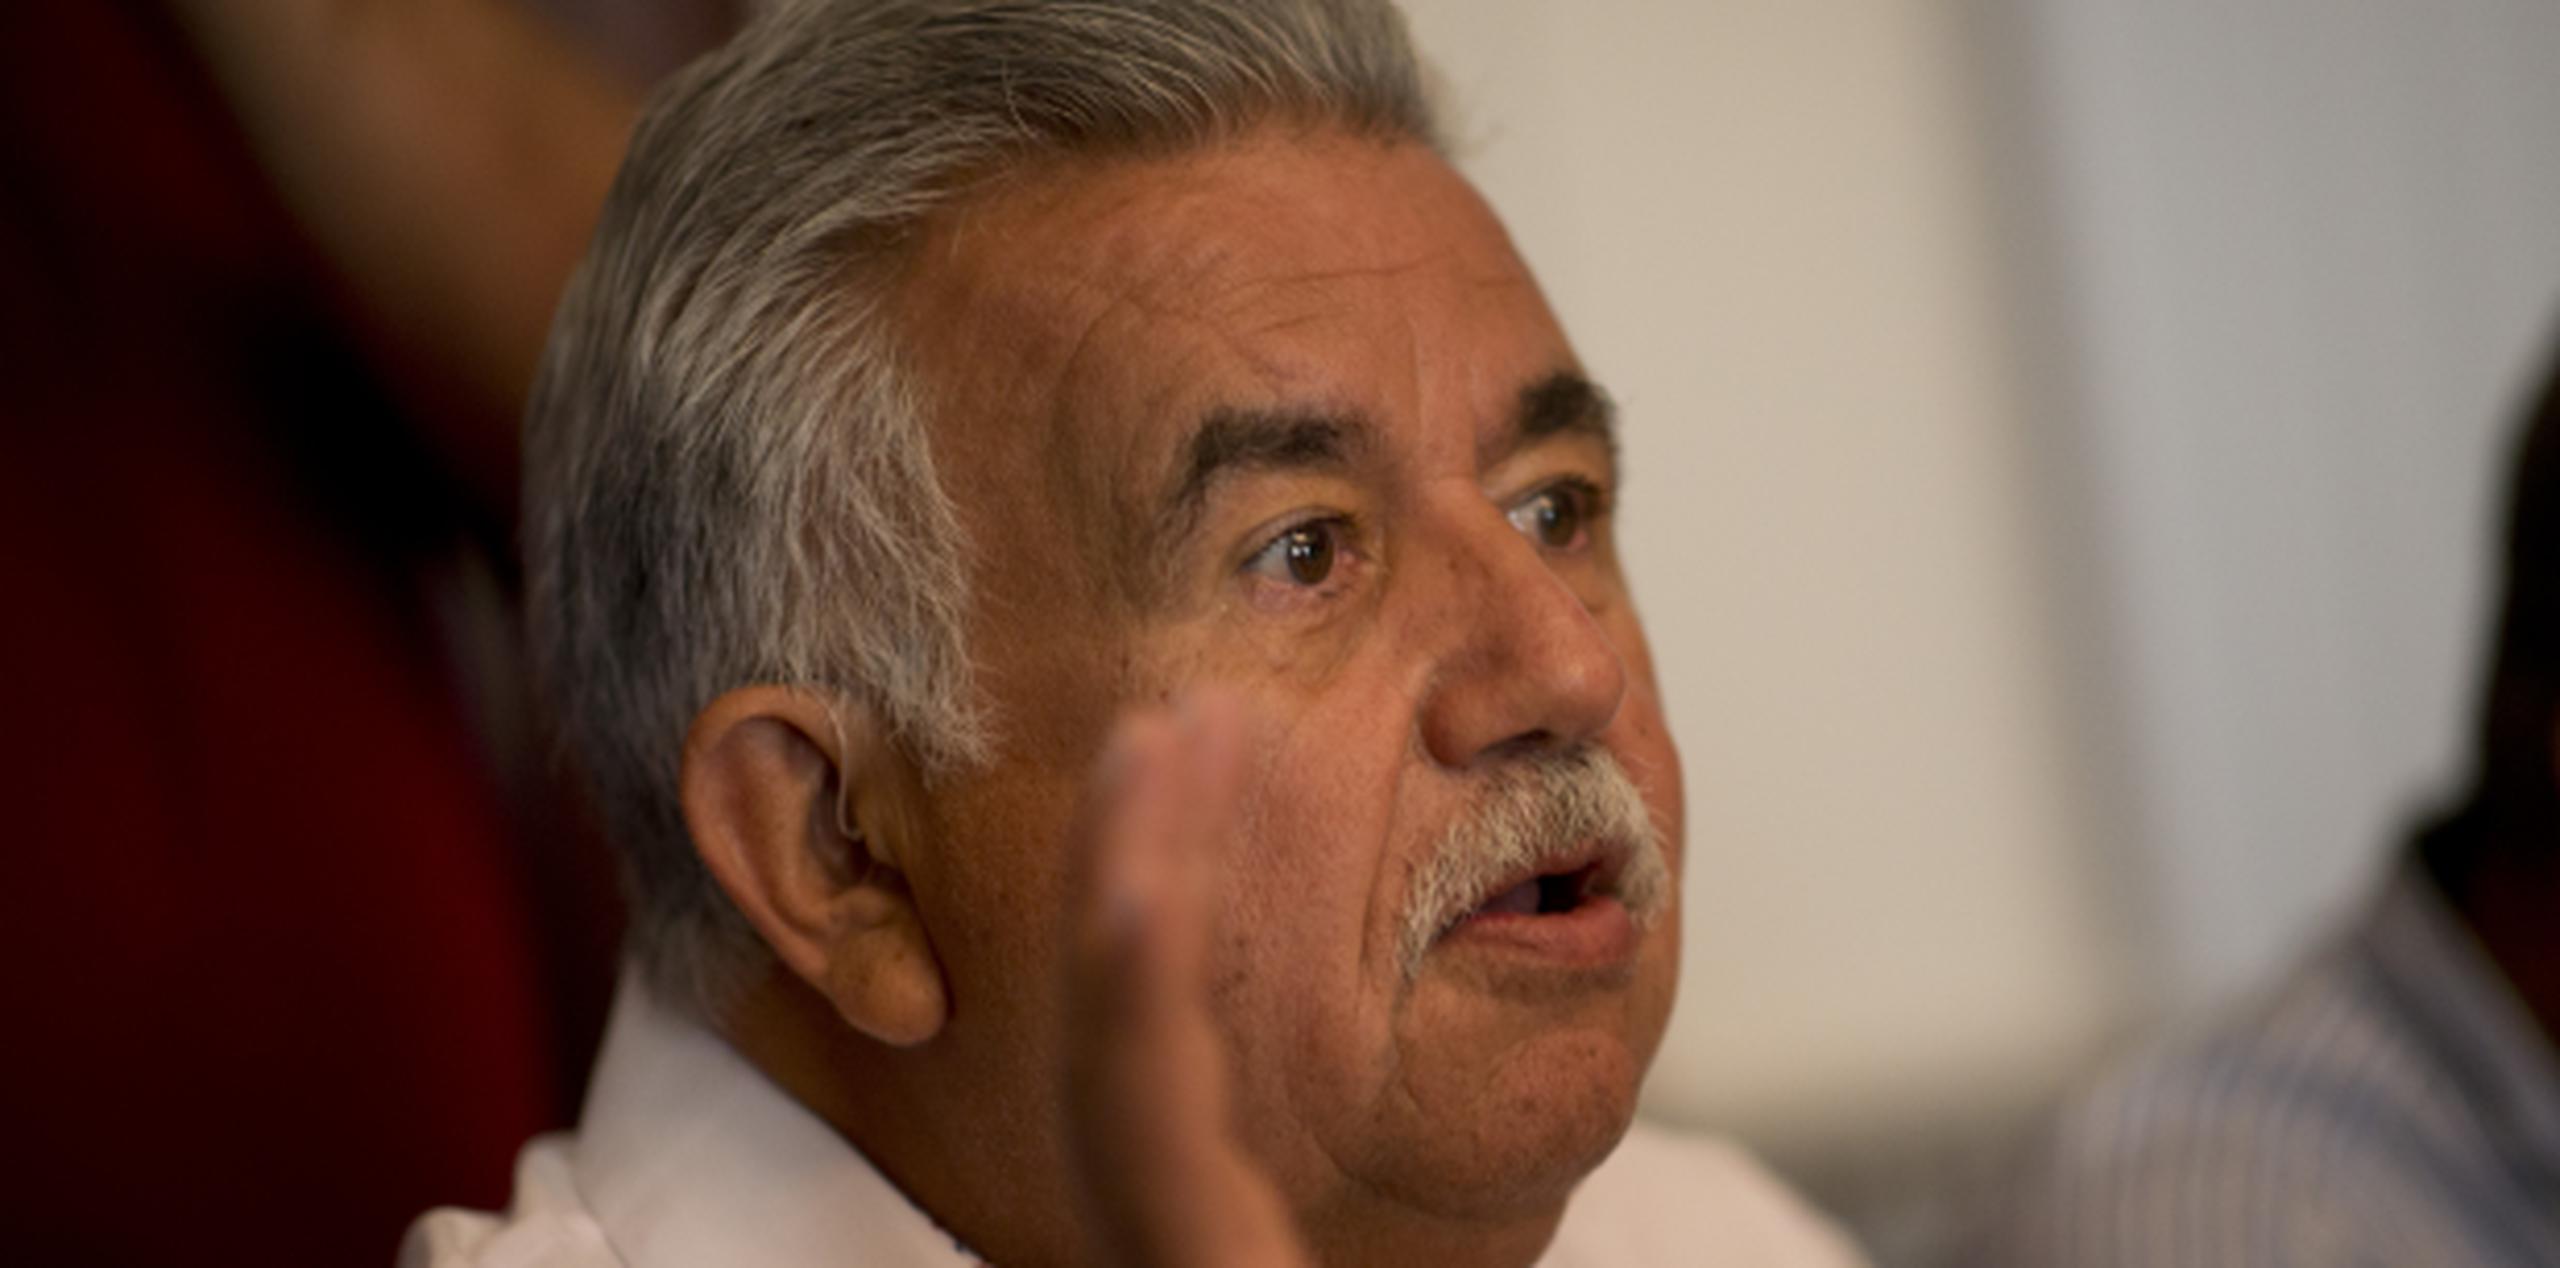 Jorge González Otero se retira frustrado, pero aseguran que otros alcaldes se sienten igual. (Archivo)